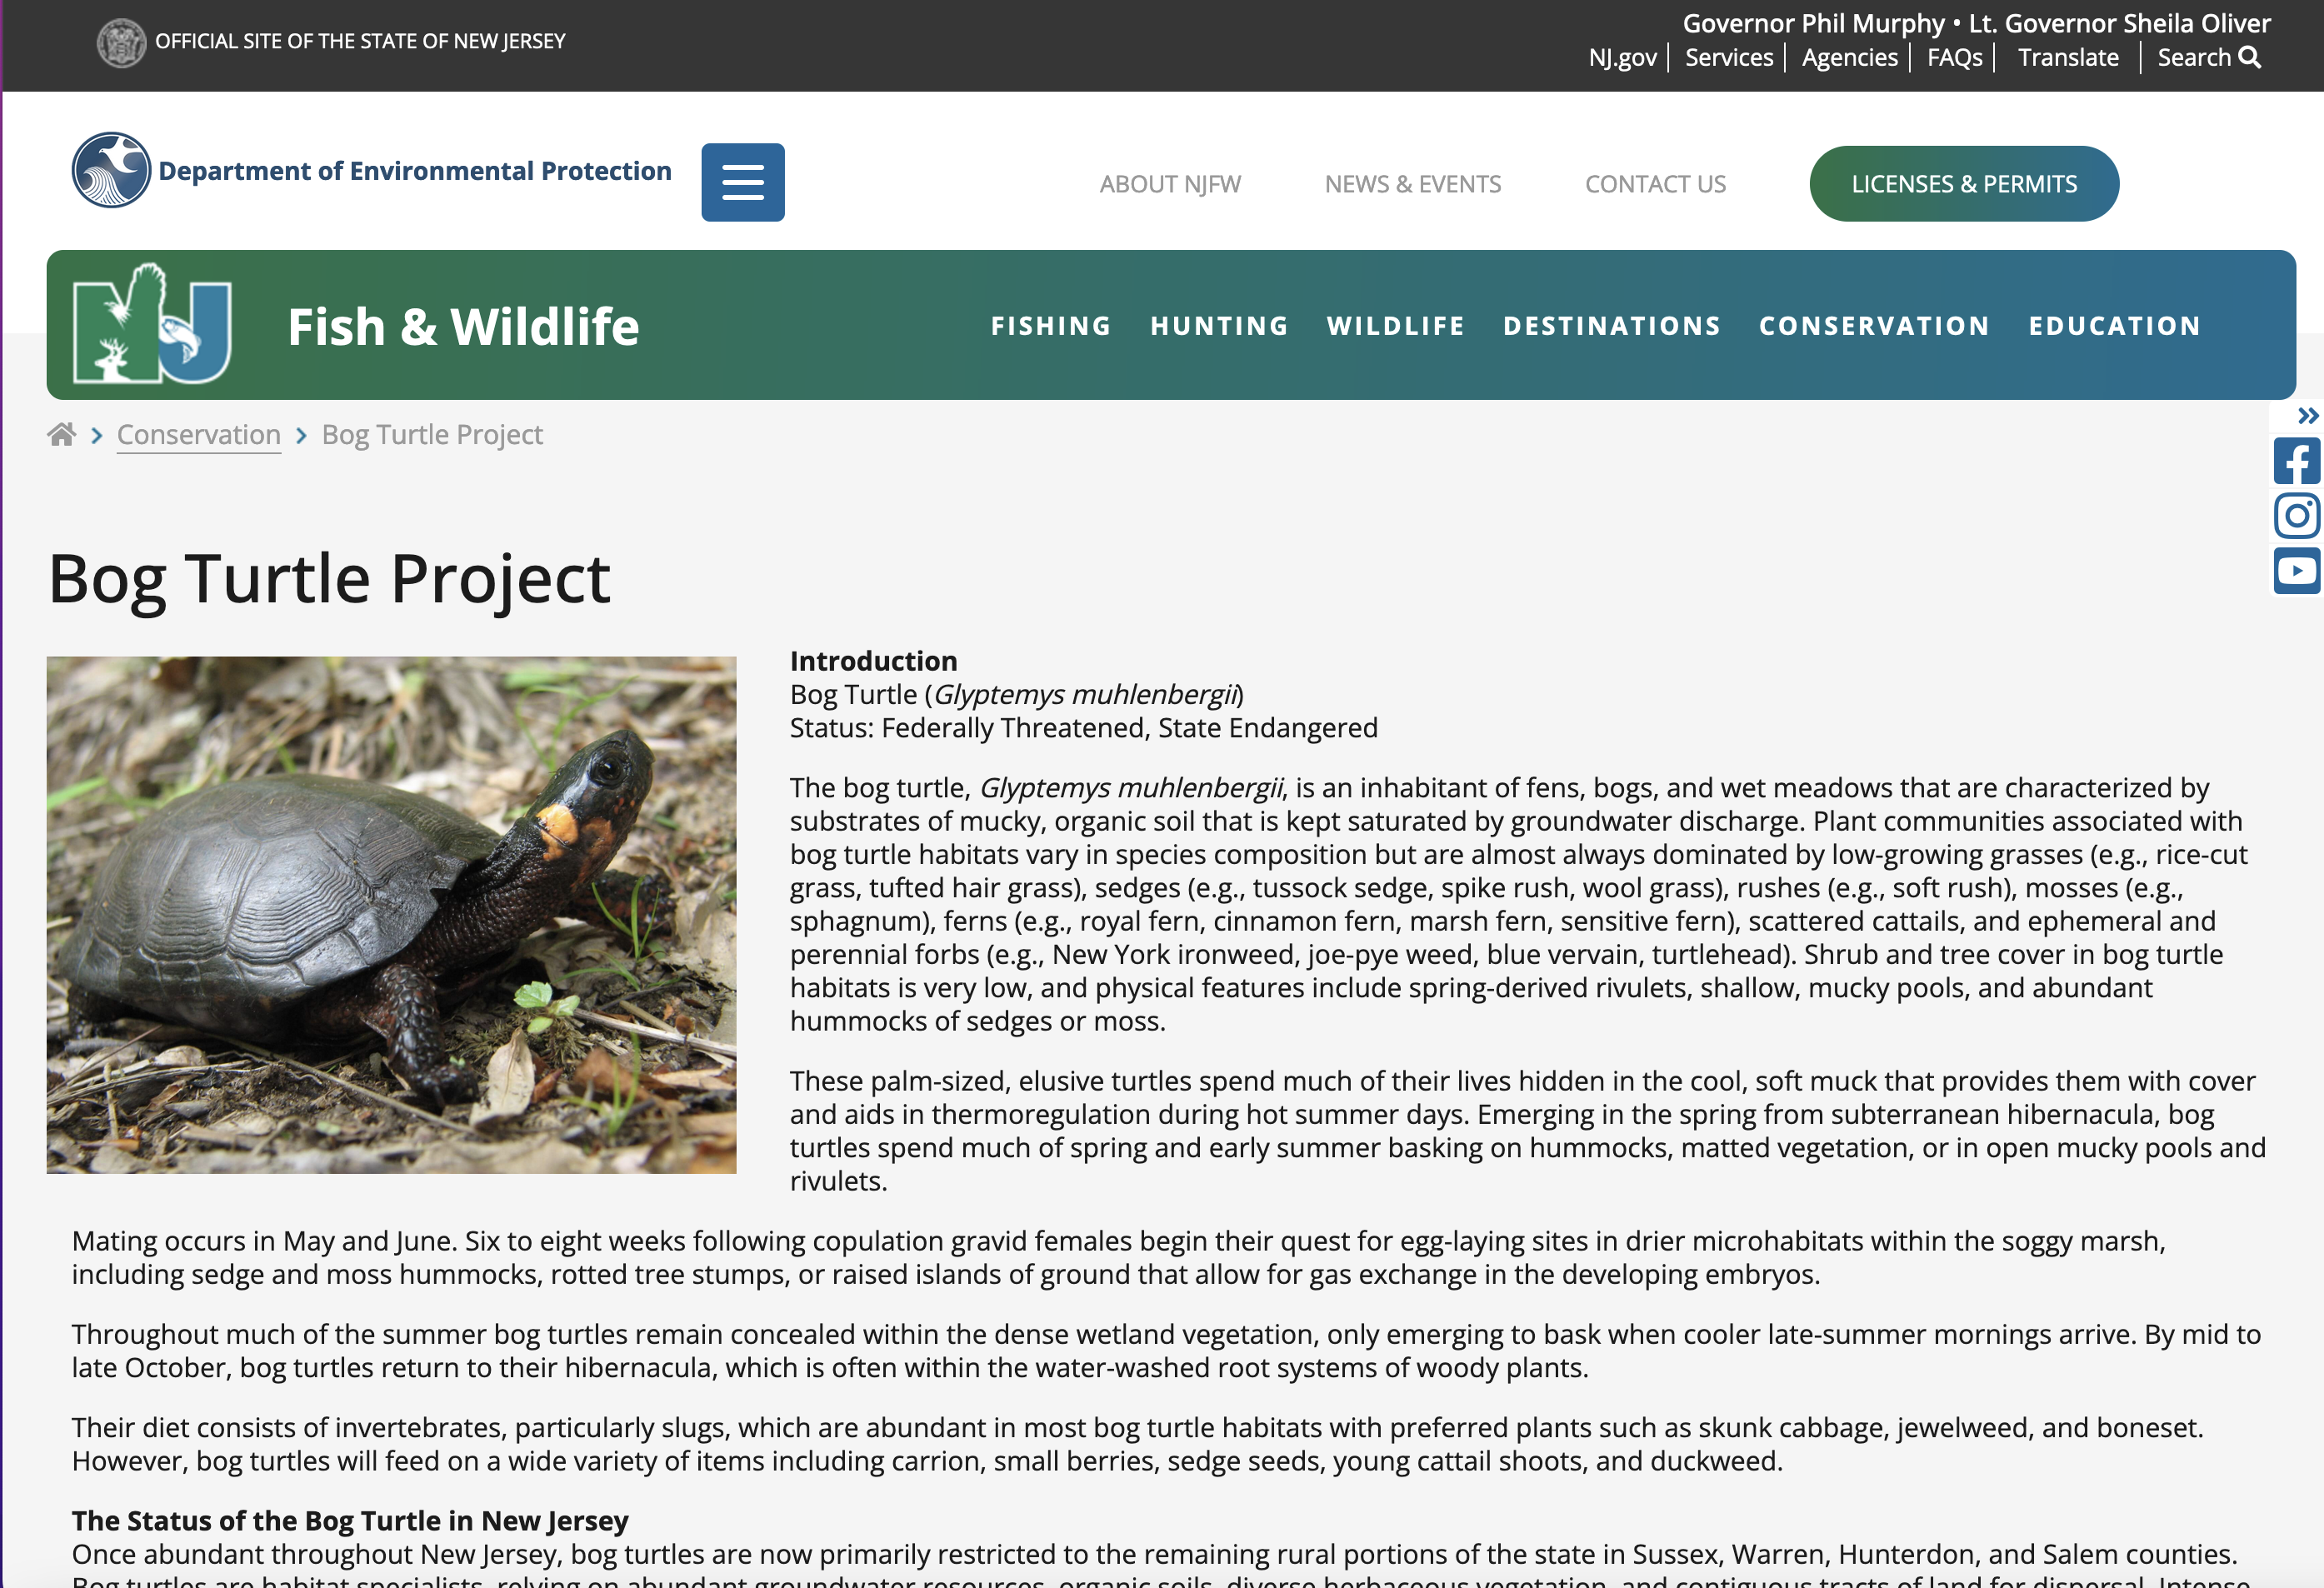 Wildlife Conservation, Initiatives